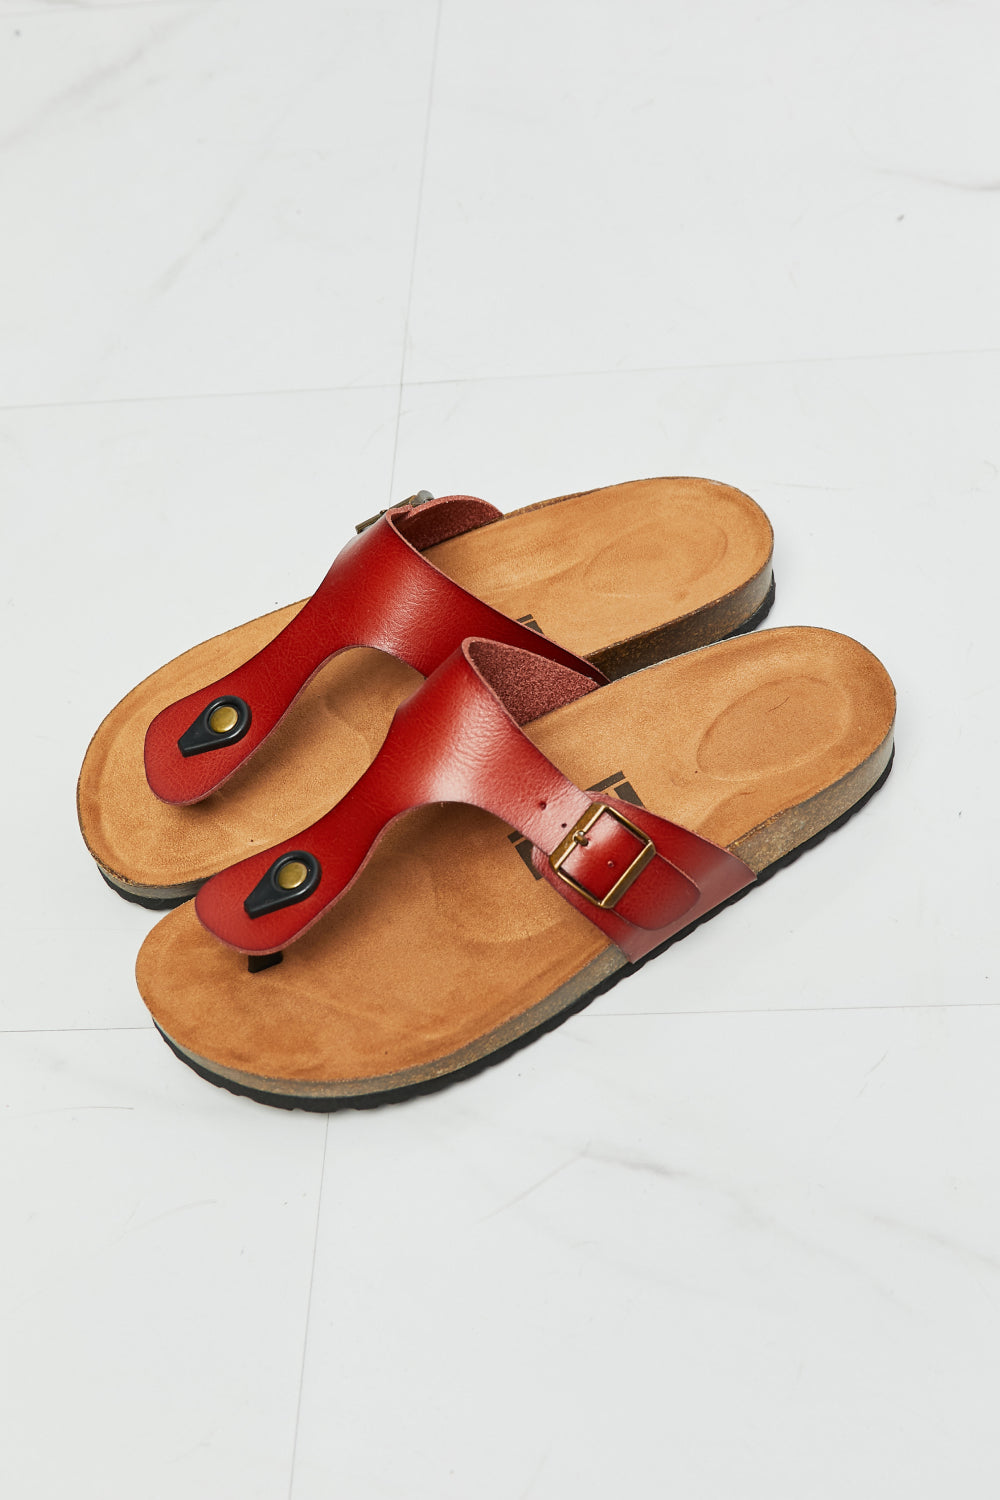 MMShoes Drift Away T-Strap Flip-Flop in Red - nailedmoms